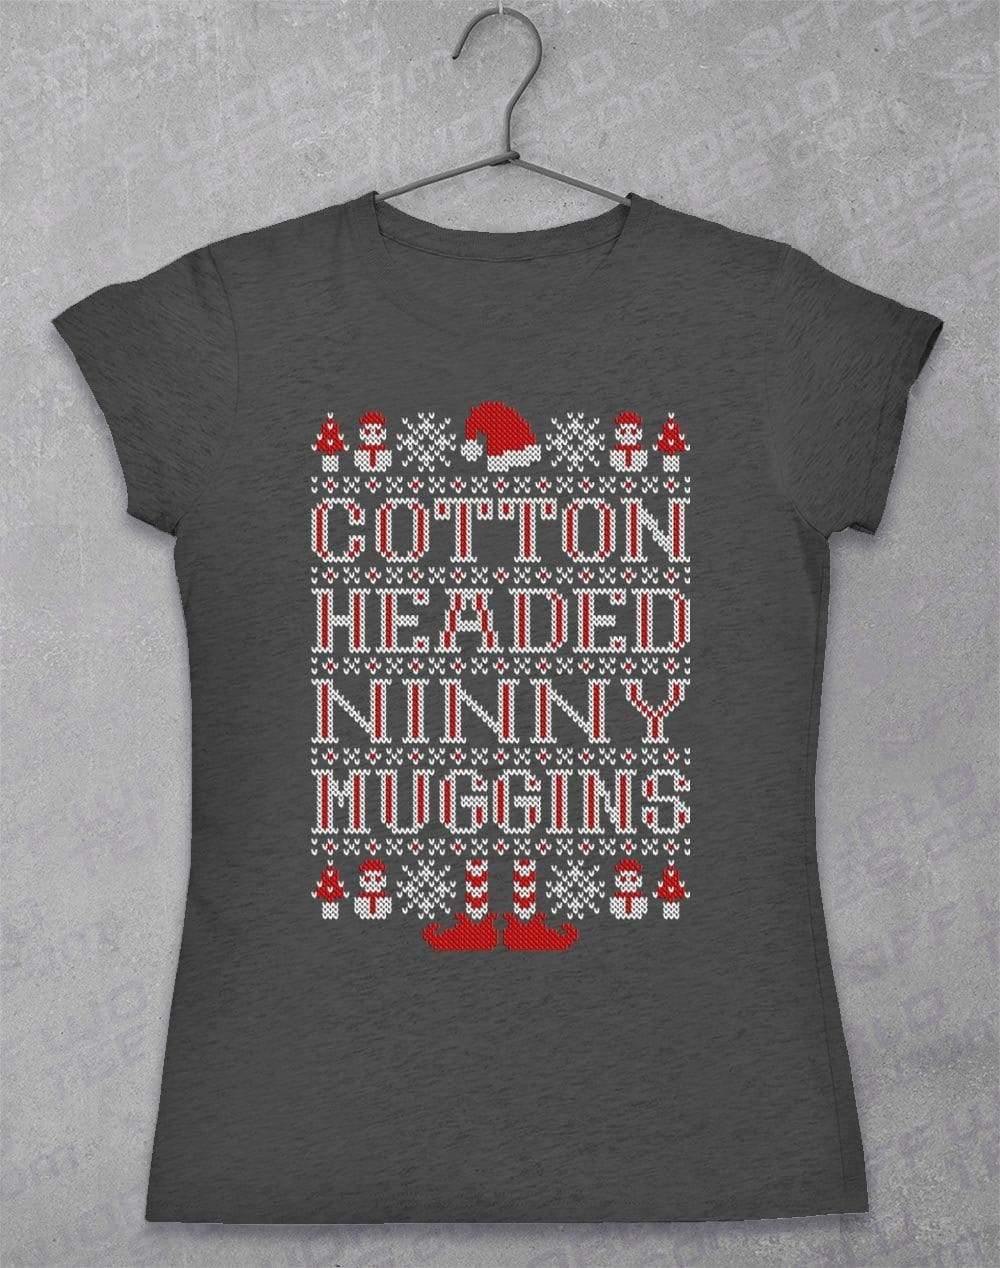 Cotton Headed Ninny Muggins Festive Knitted-Look Women's T-Shirt 8-10 / Dark Heather  - Off World Tees